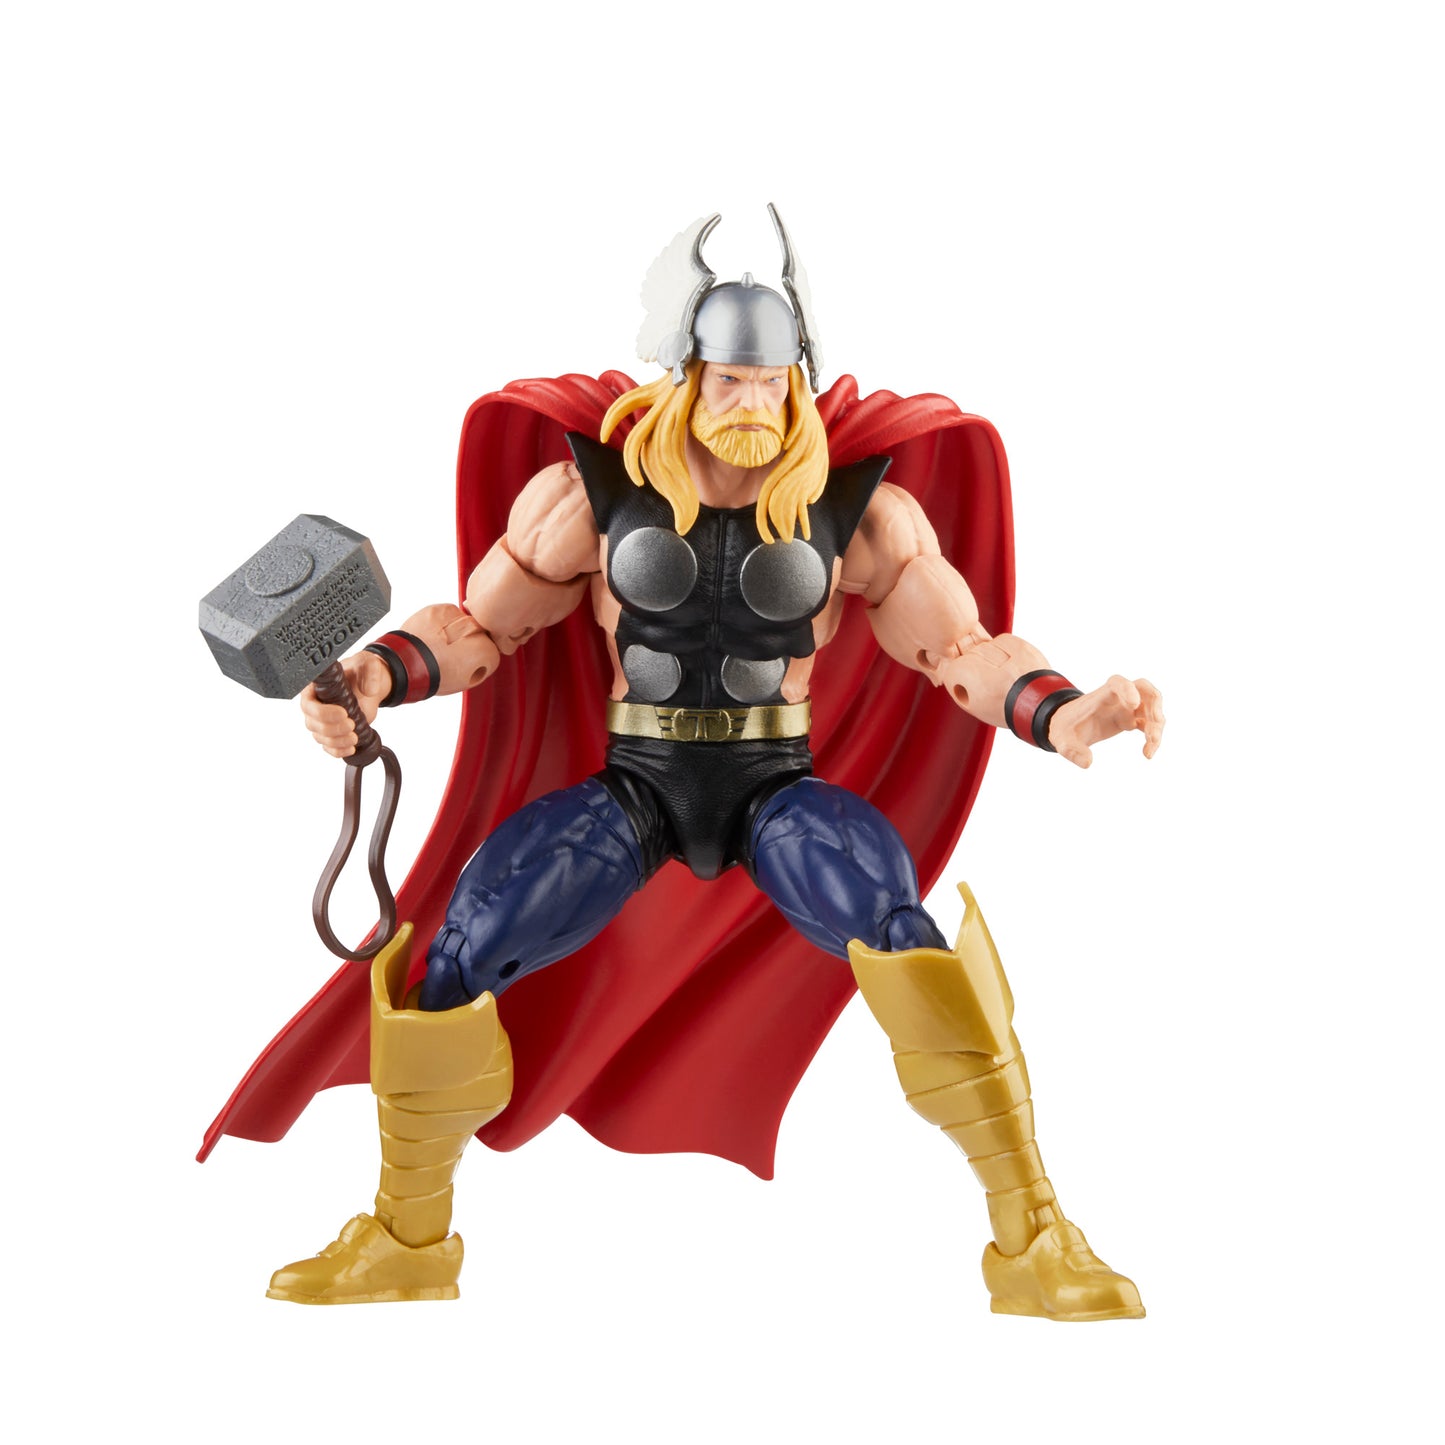 Marvel Legends Thor Action Figure Toy - Heretoserveyou